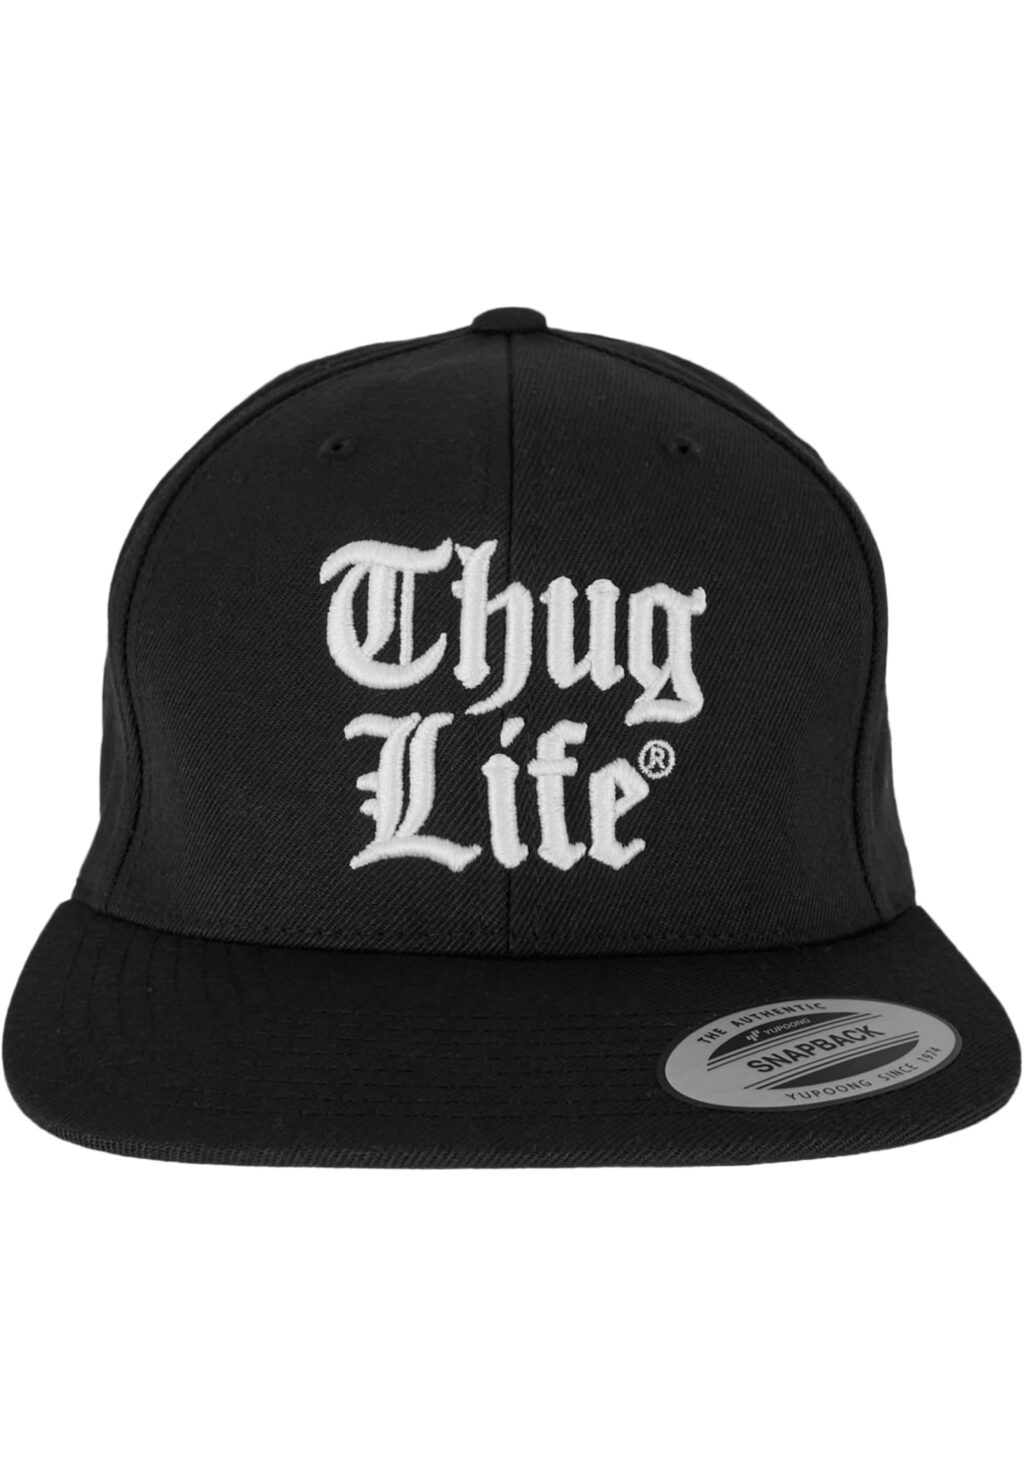 Thug Life Overthink Cap black one TLCA130